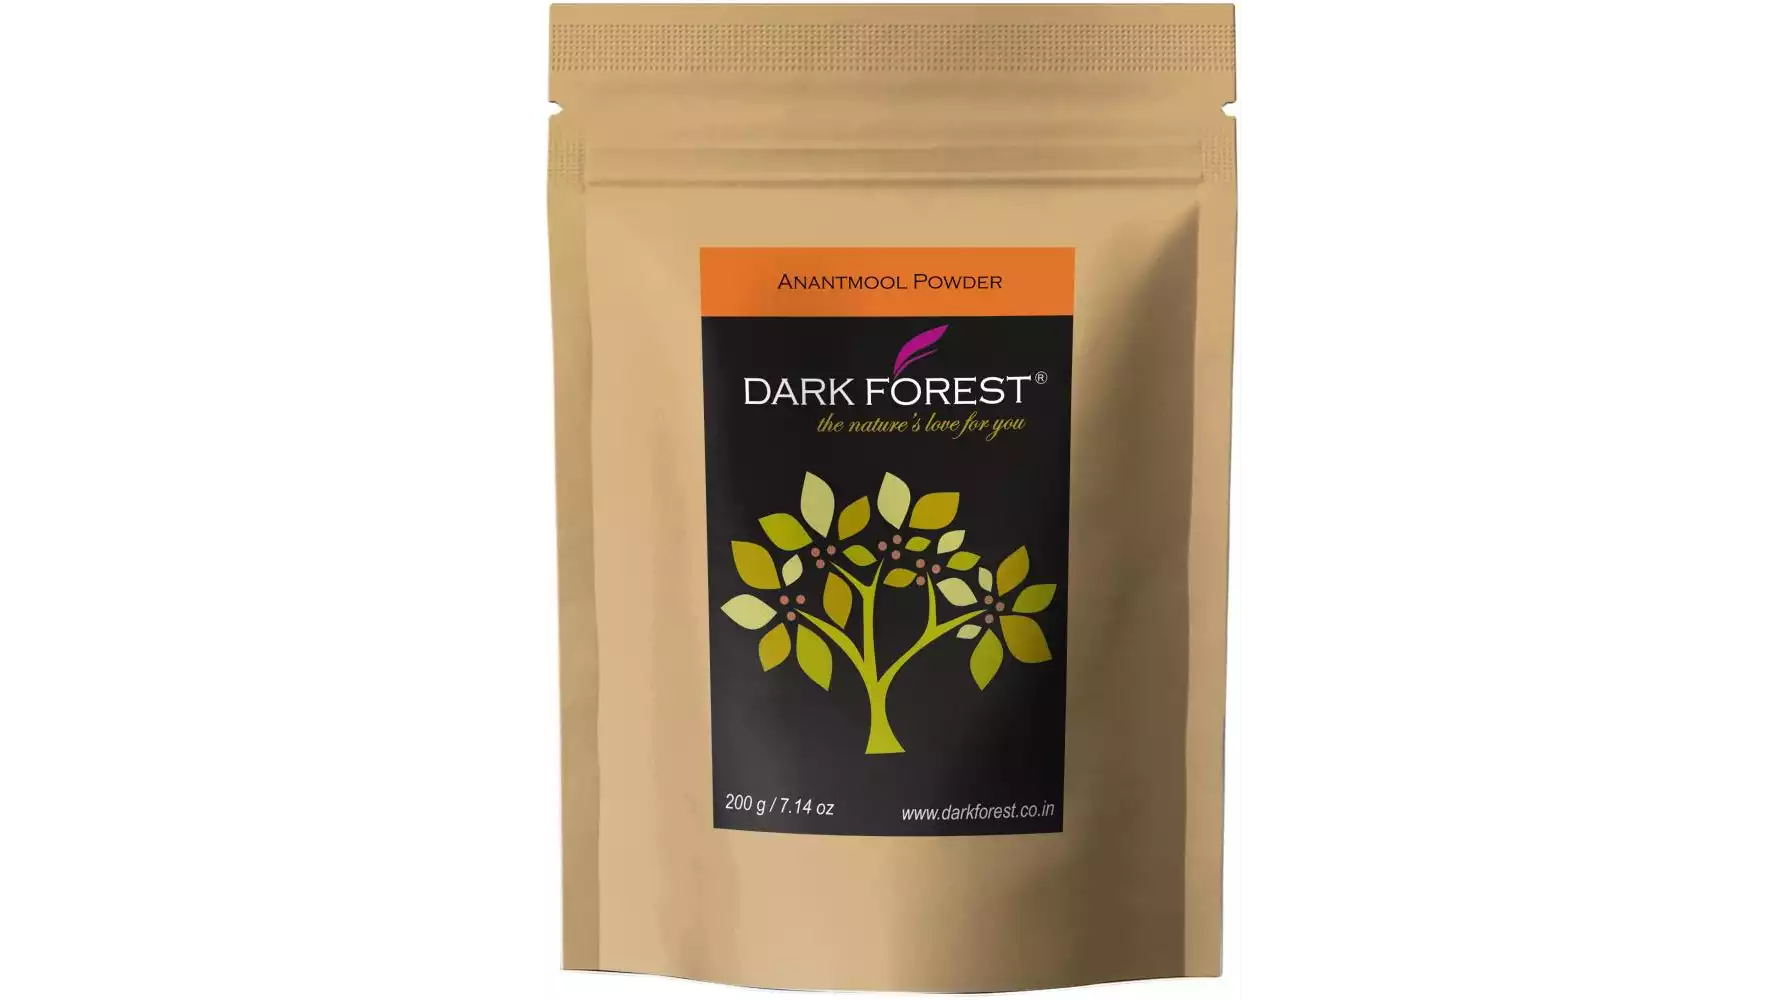 Dark Forest Anantmool (Indian Sarasaparilla) Powder (200g)